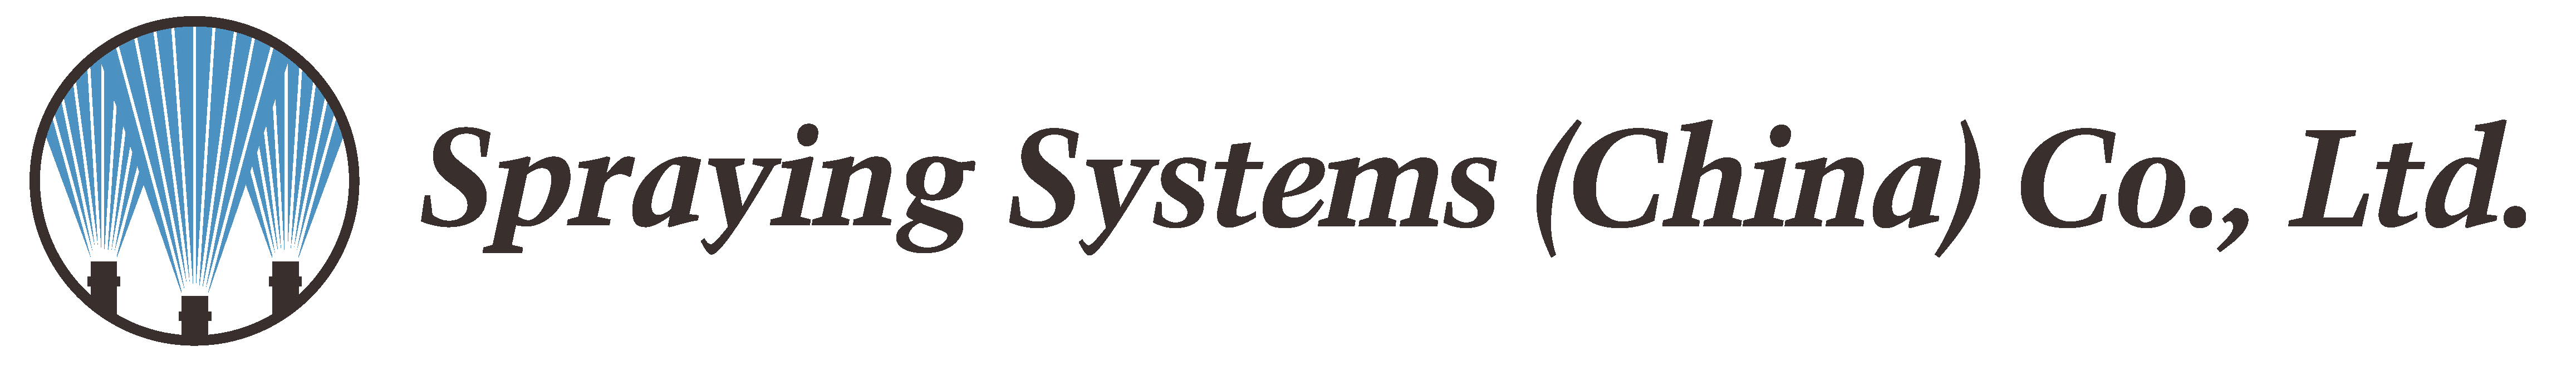 Spraying Systems (China) Co., Ltd._logo